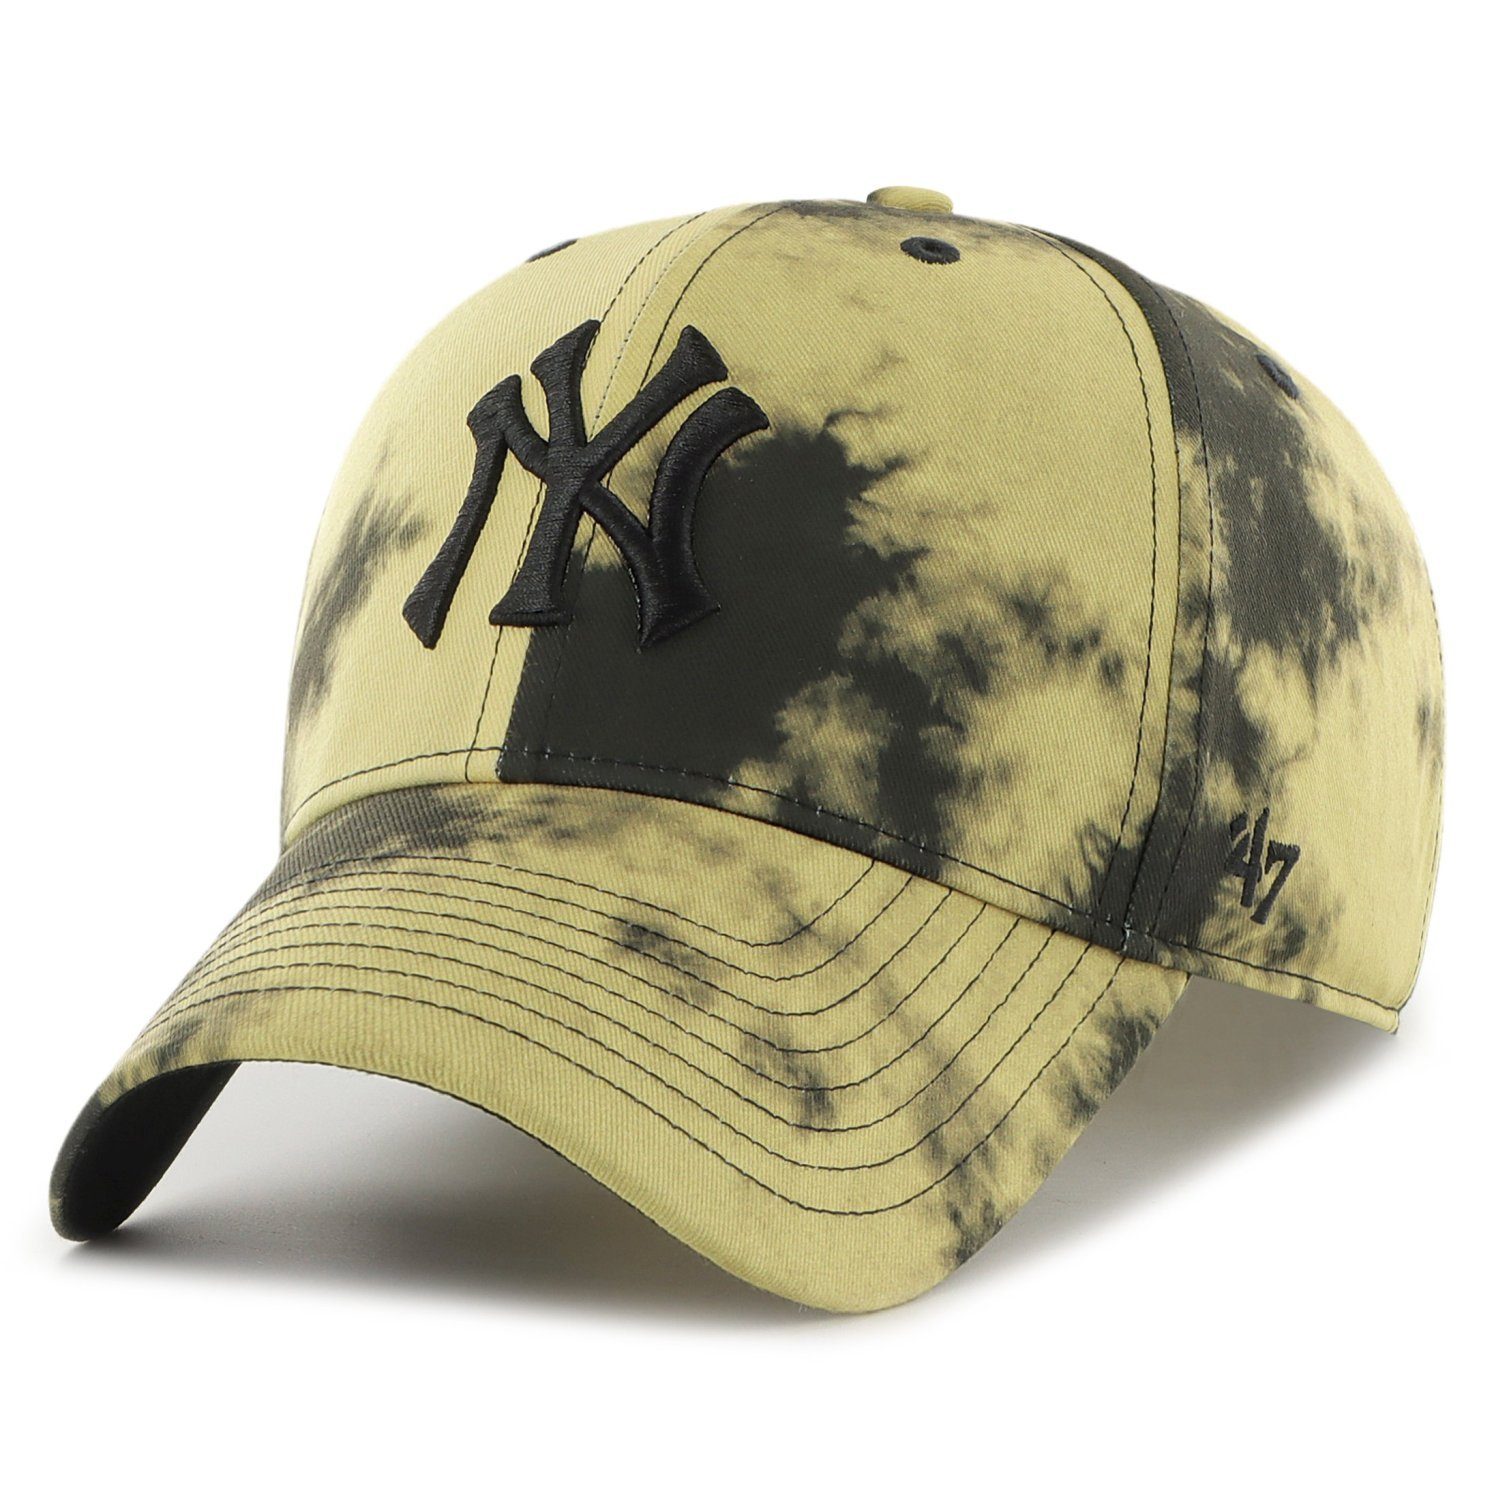 DYE gold Snapback Brand York New Yankees '47 TIE Cap